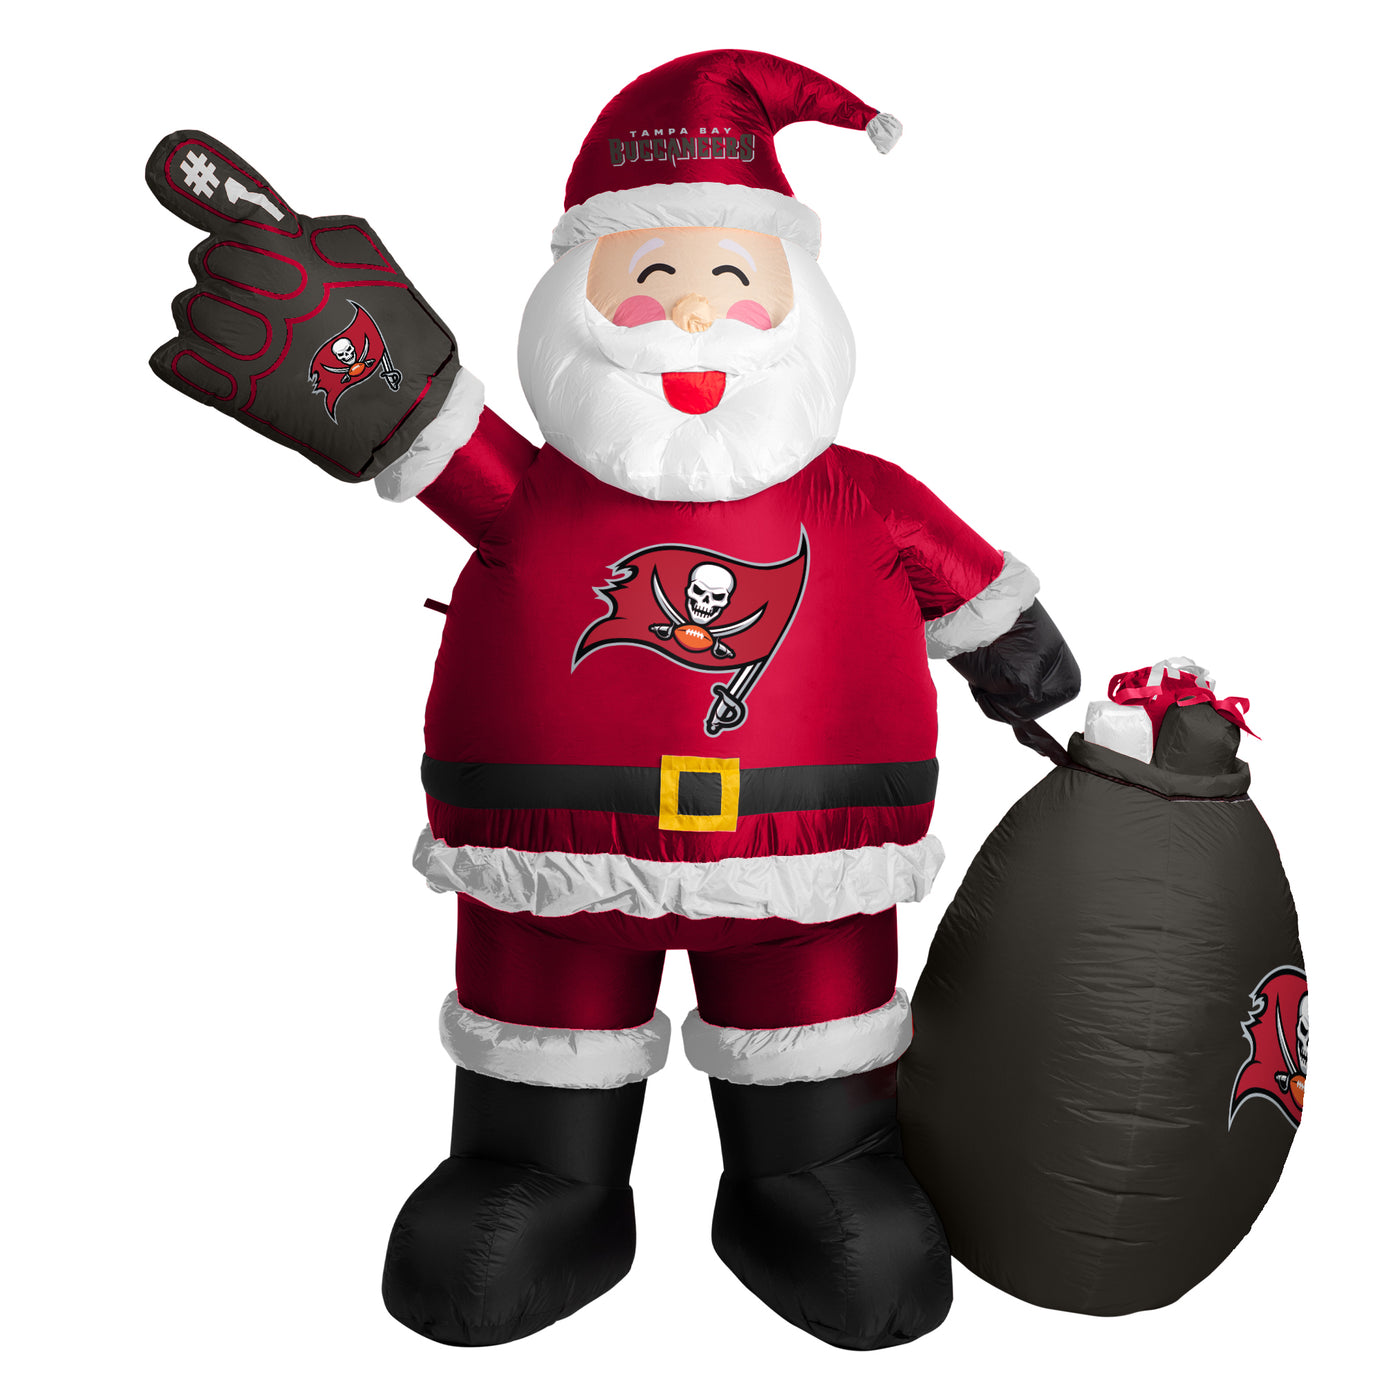 Tampa Bay Buccaneers Santa Claus Yard Inflatable